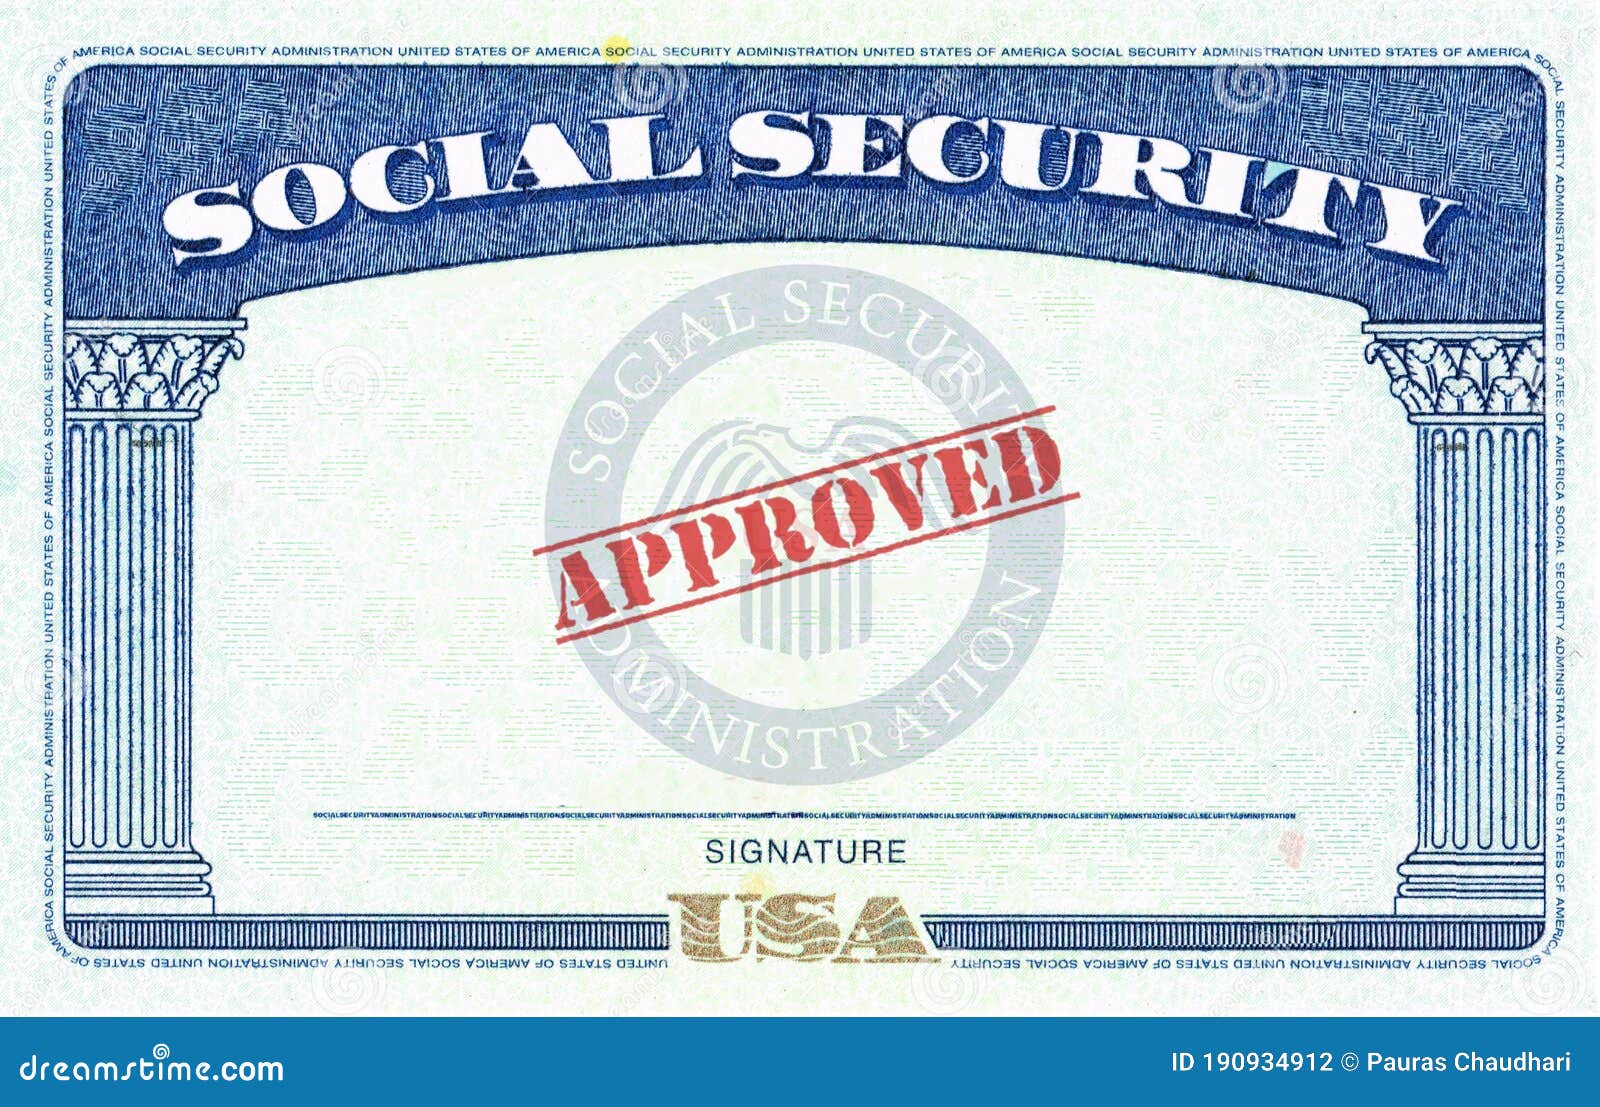 Social Security Card Template Photos - Free & Royalty-Free Stock In Social Security Card Template Free